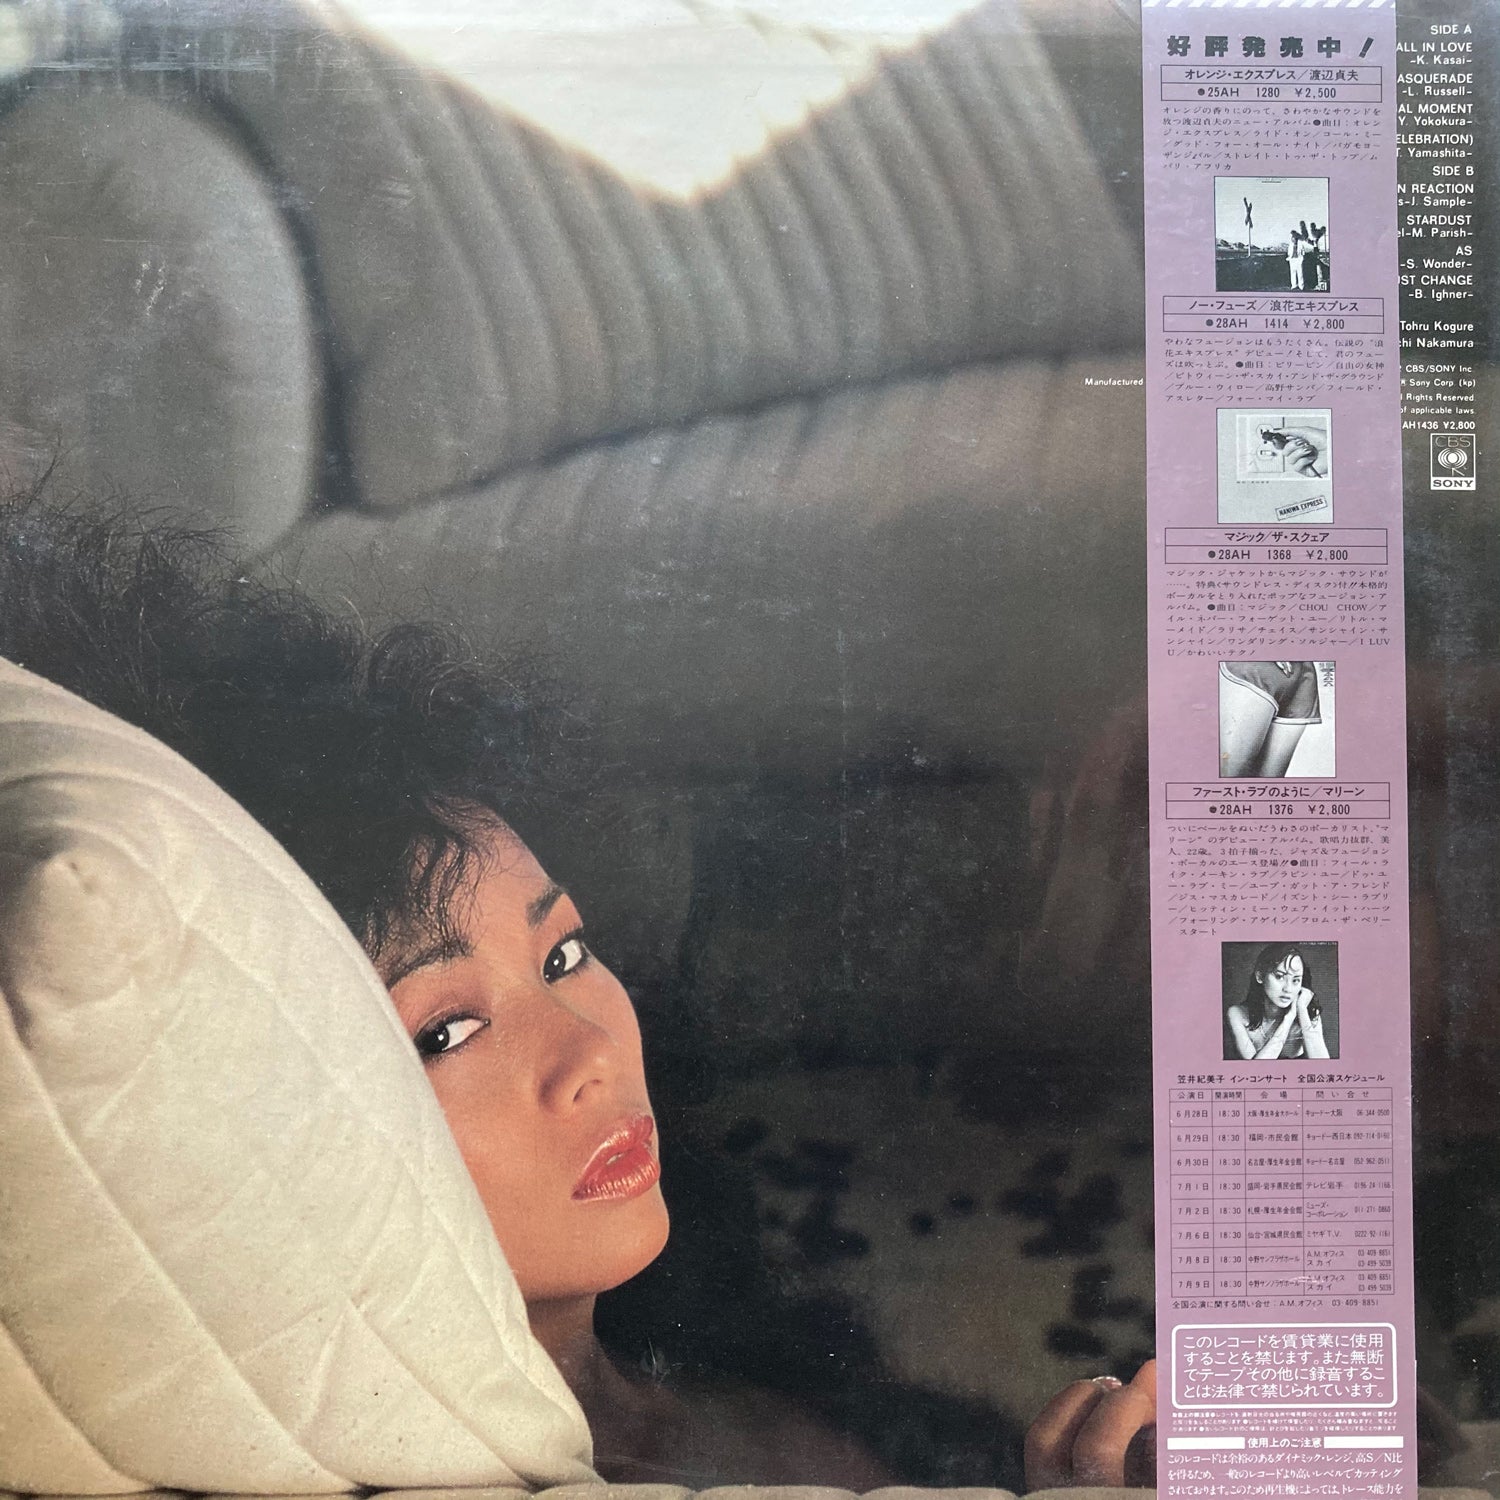 Kimiko Kasai - Love Connection